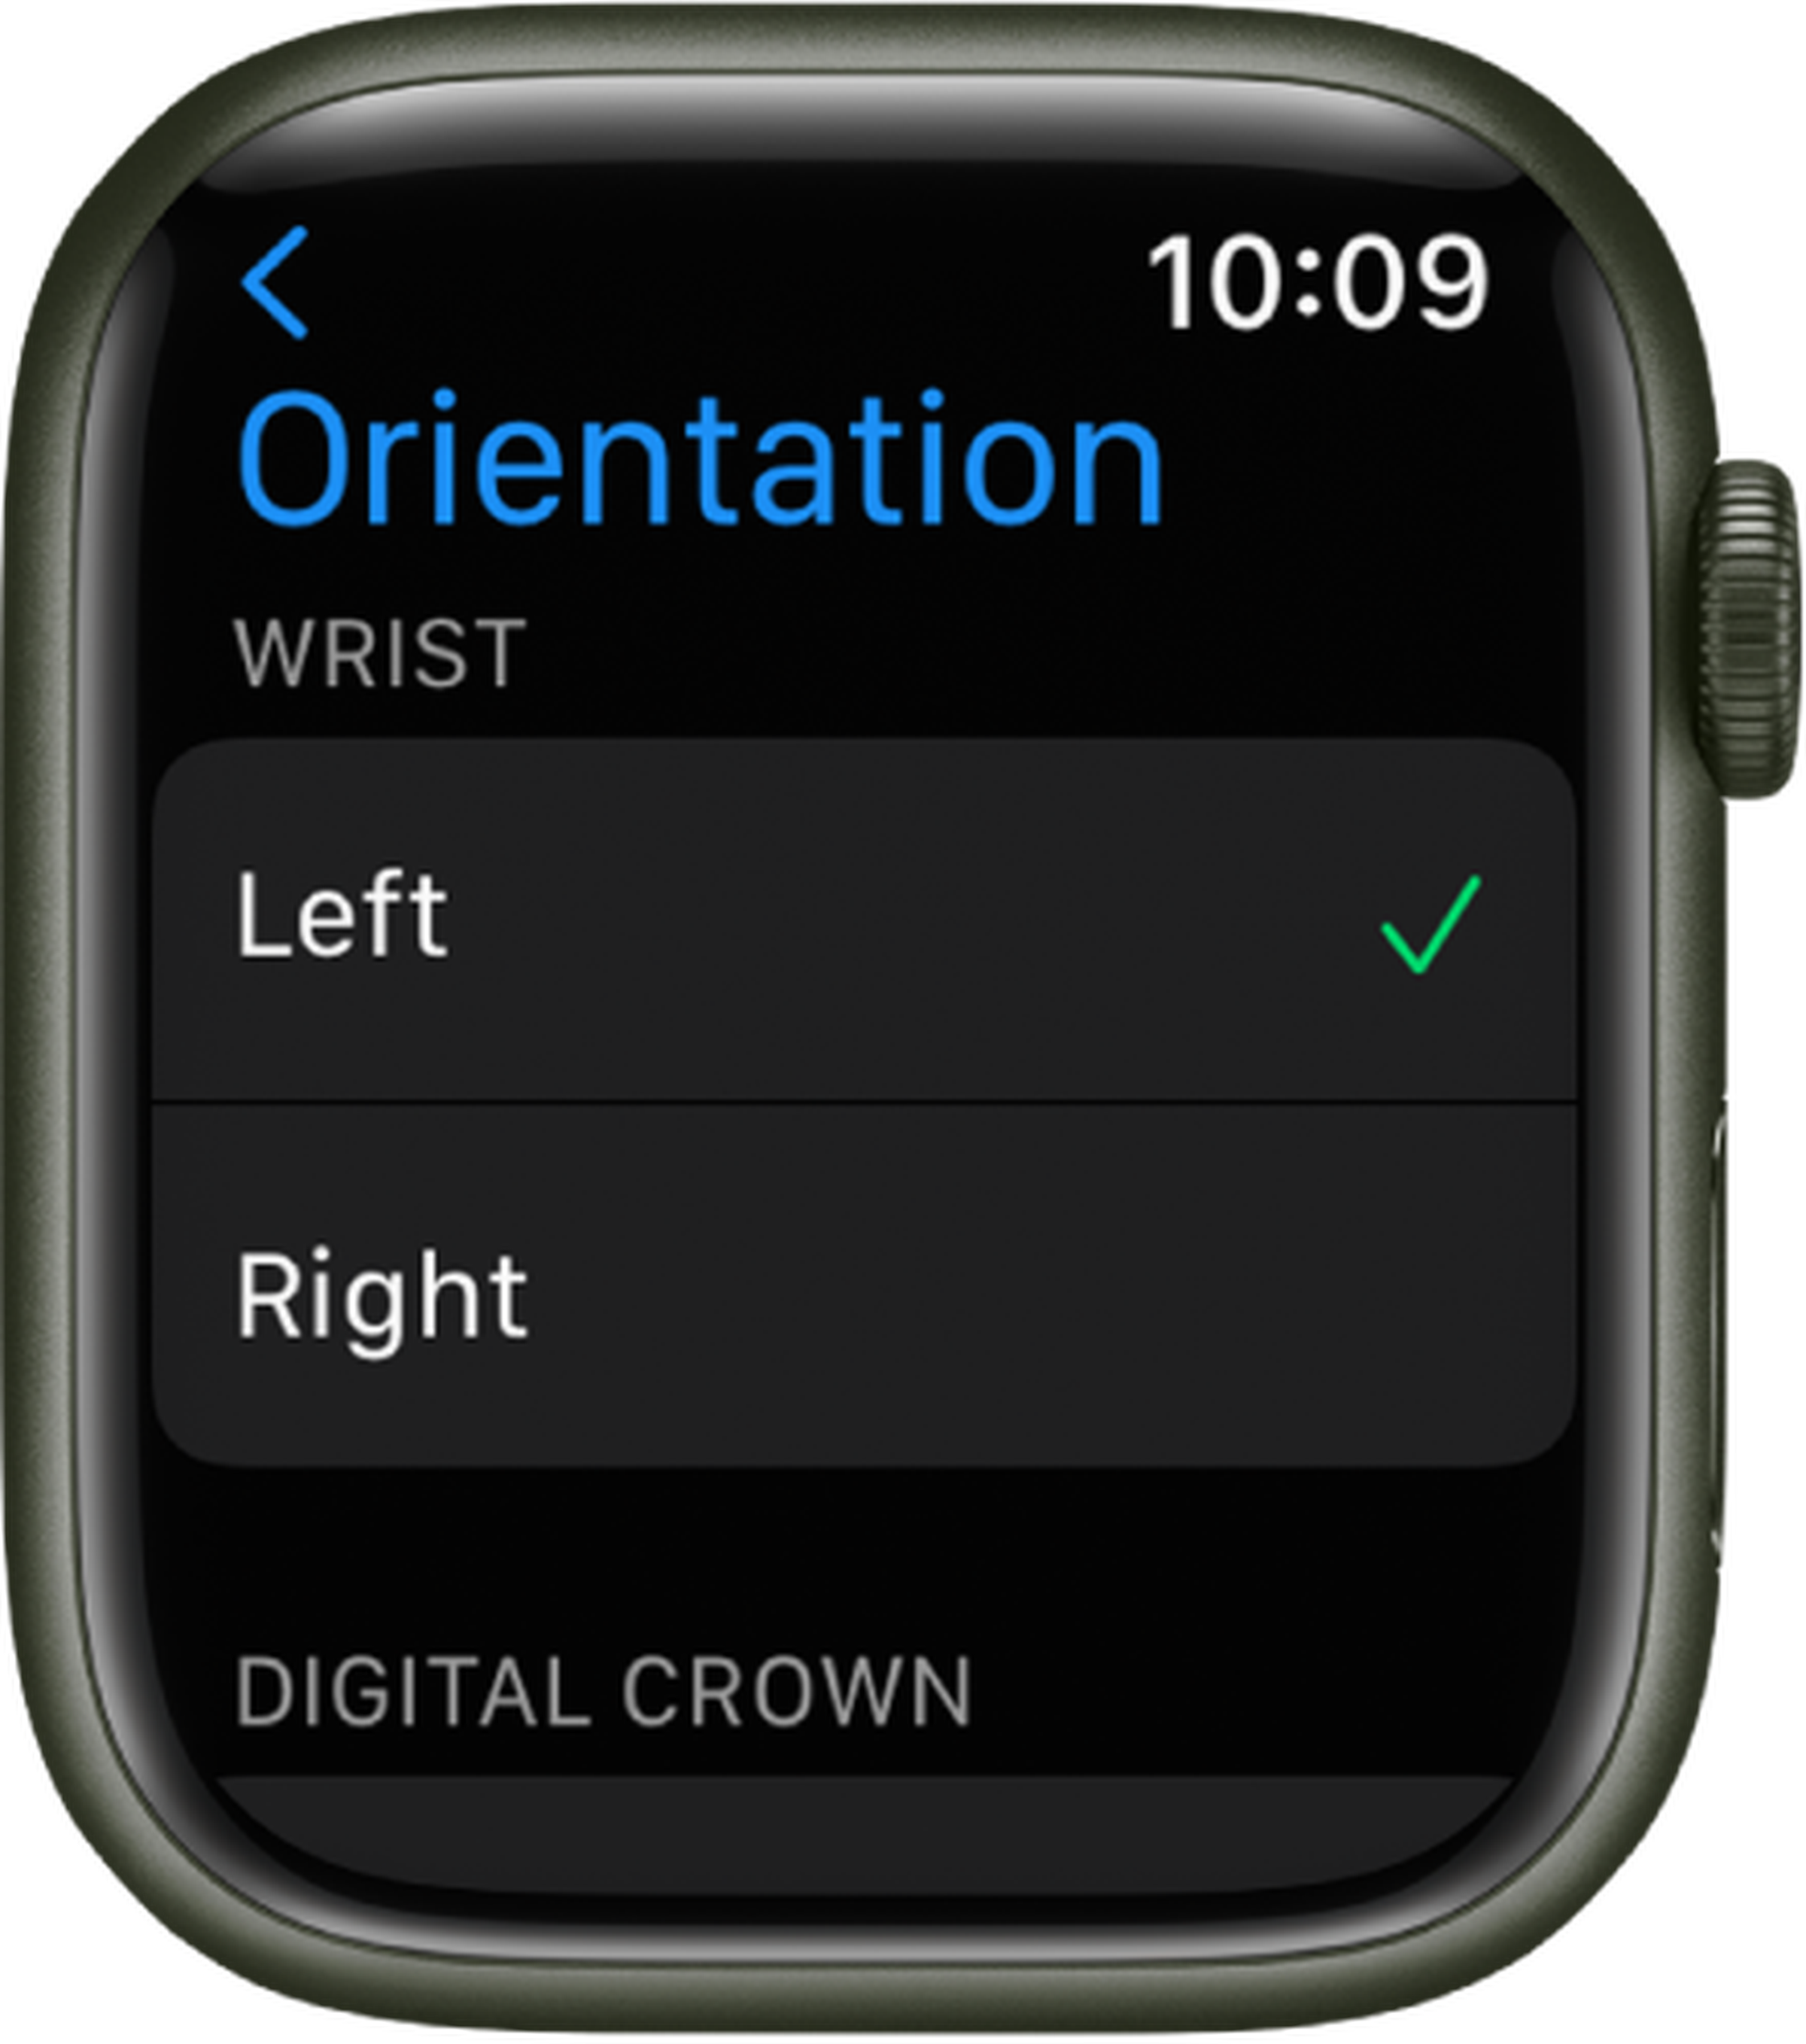 Render of the orientation menu shown on an Apple Watch screen